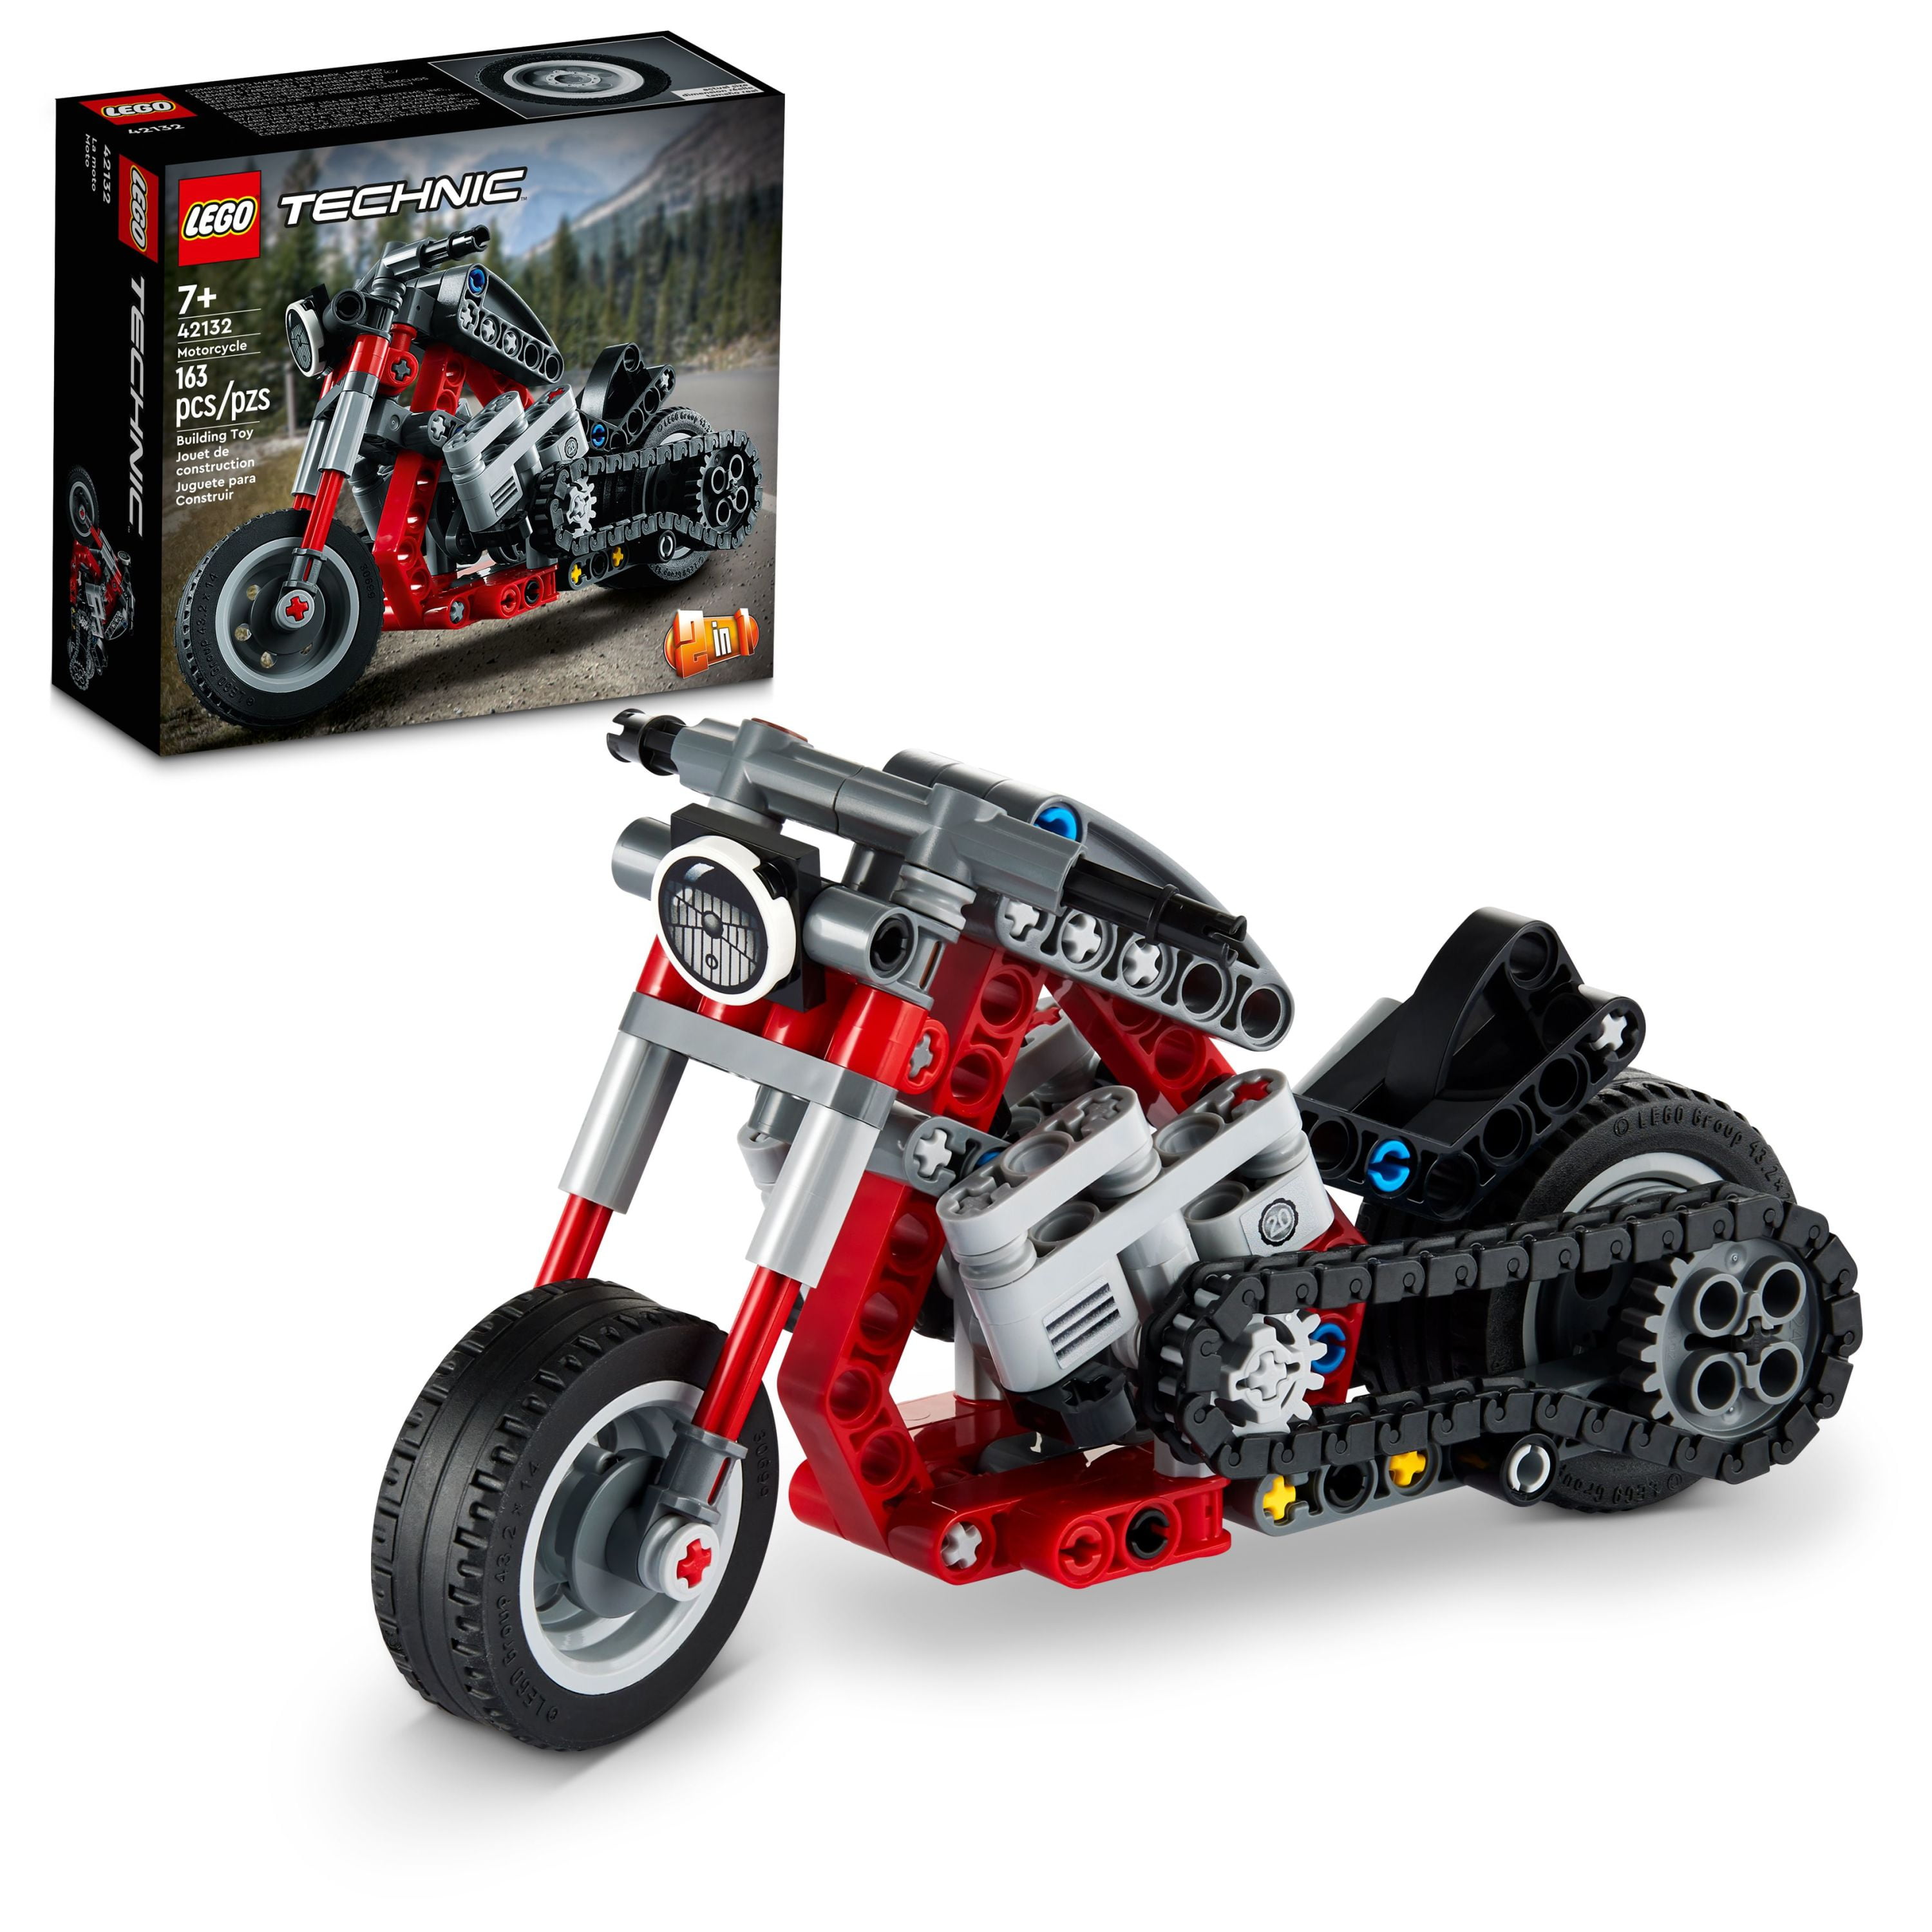 LEGO Bike Sets